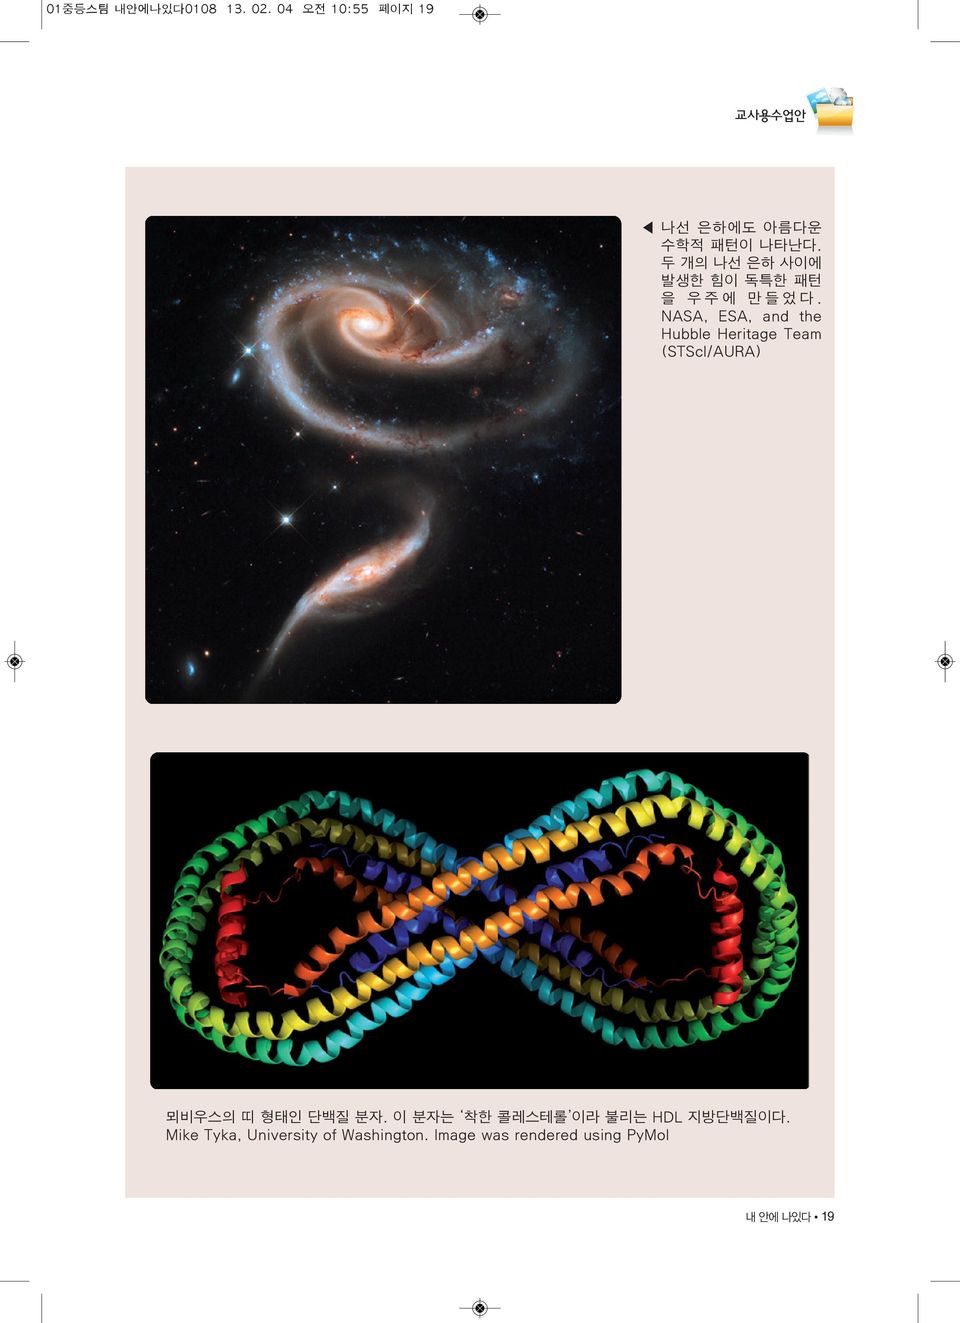 NASA, ESA, and the Hubble Heritage Team (STScI/AURA) 뫼비우스의 띠 형태인 단백질 분자.